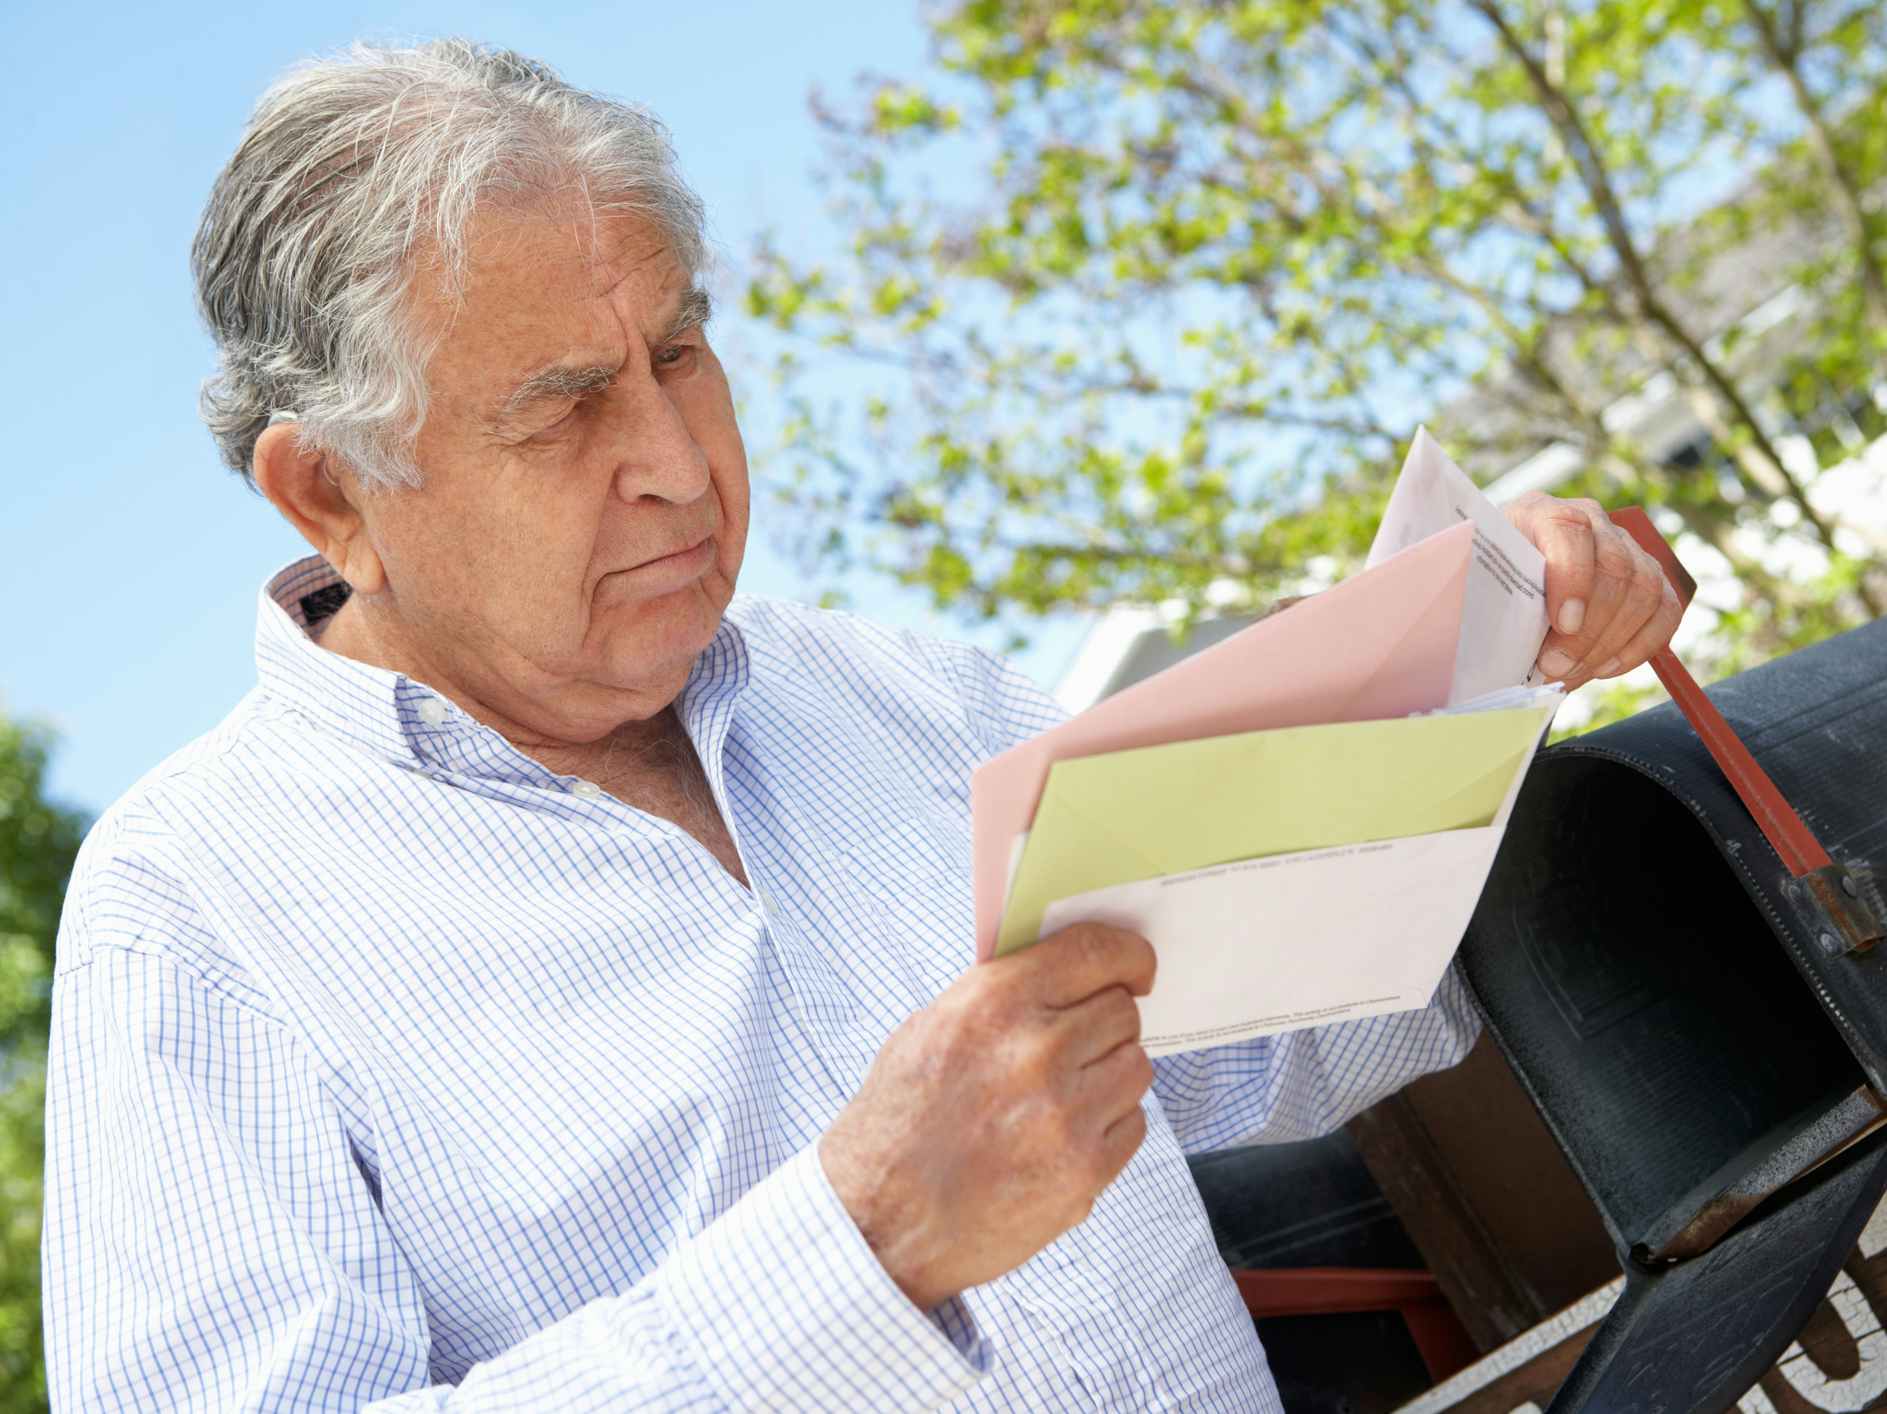 A senior man standing at a mailbox, looking at some envelopes.